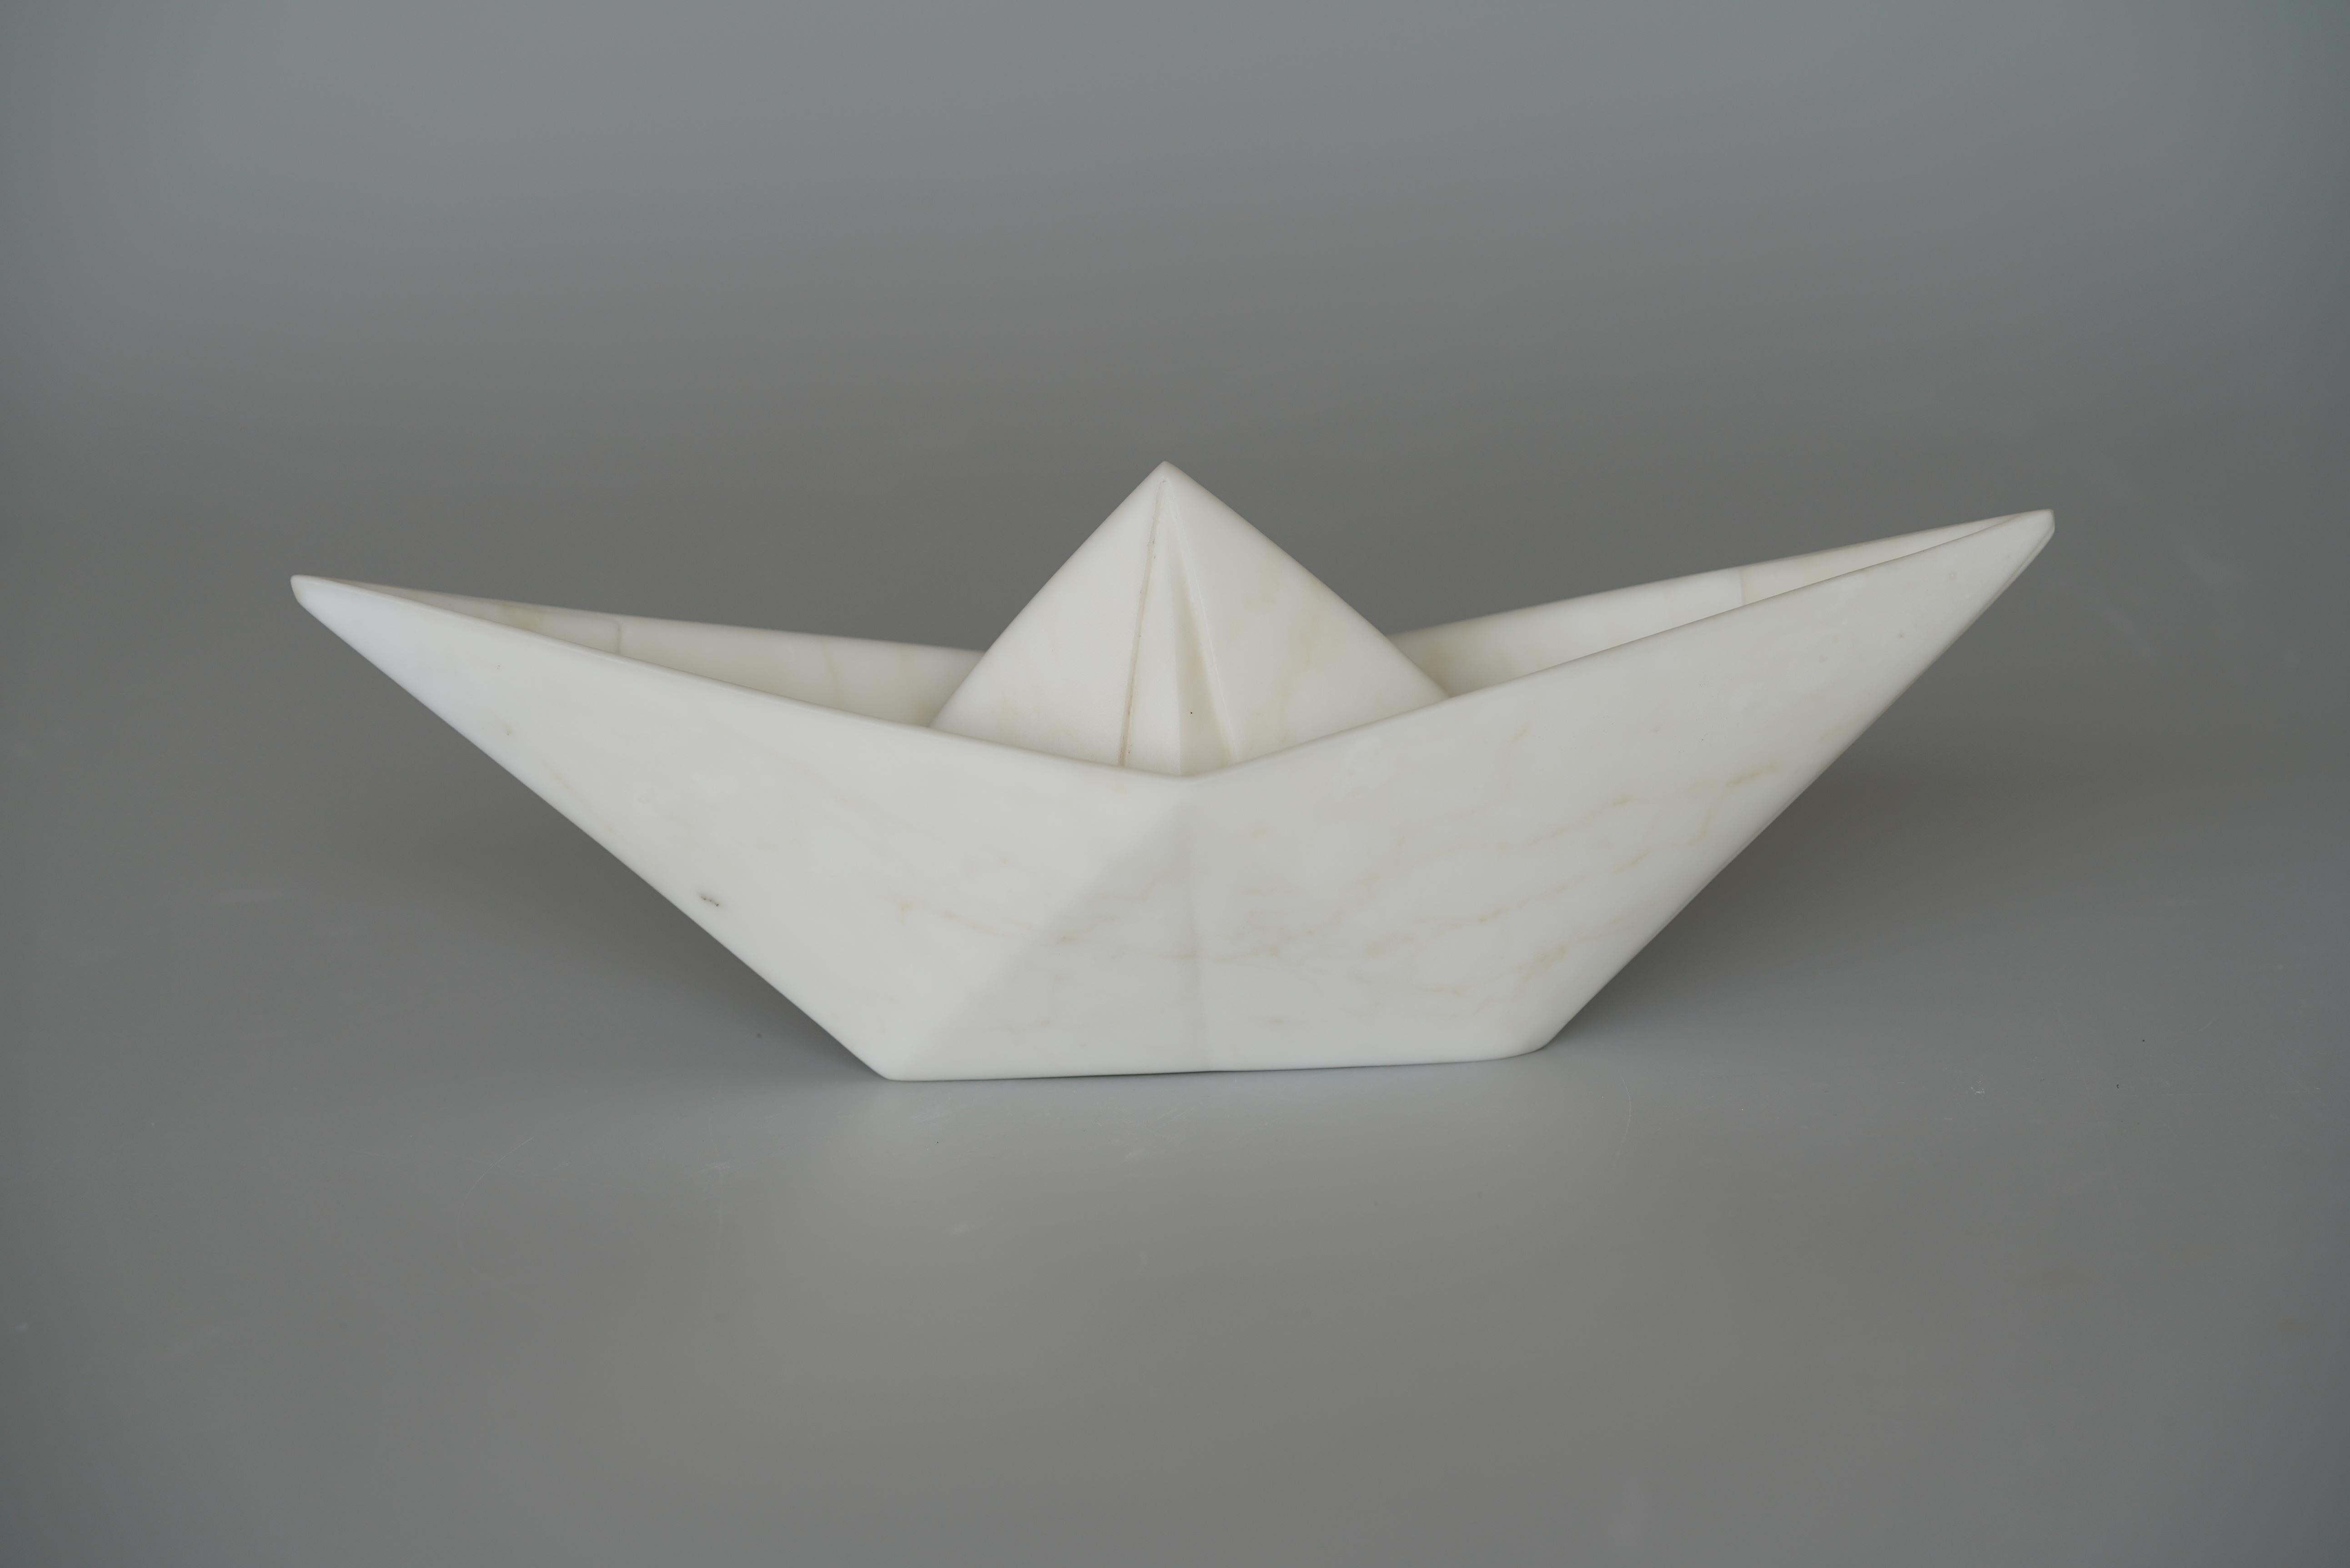 Paper boat - Sculpture by John Bizas